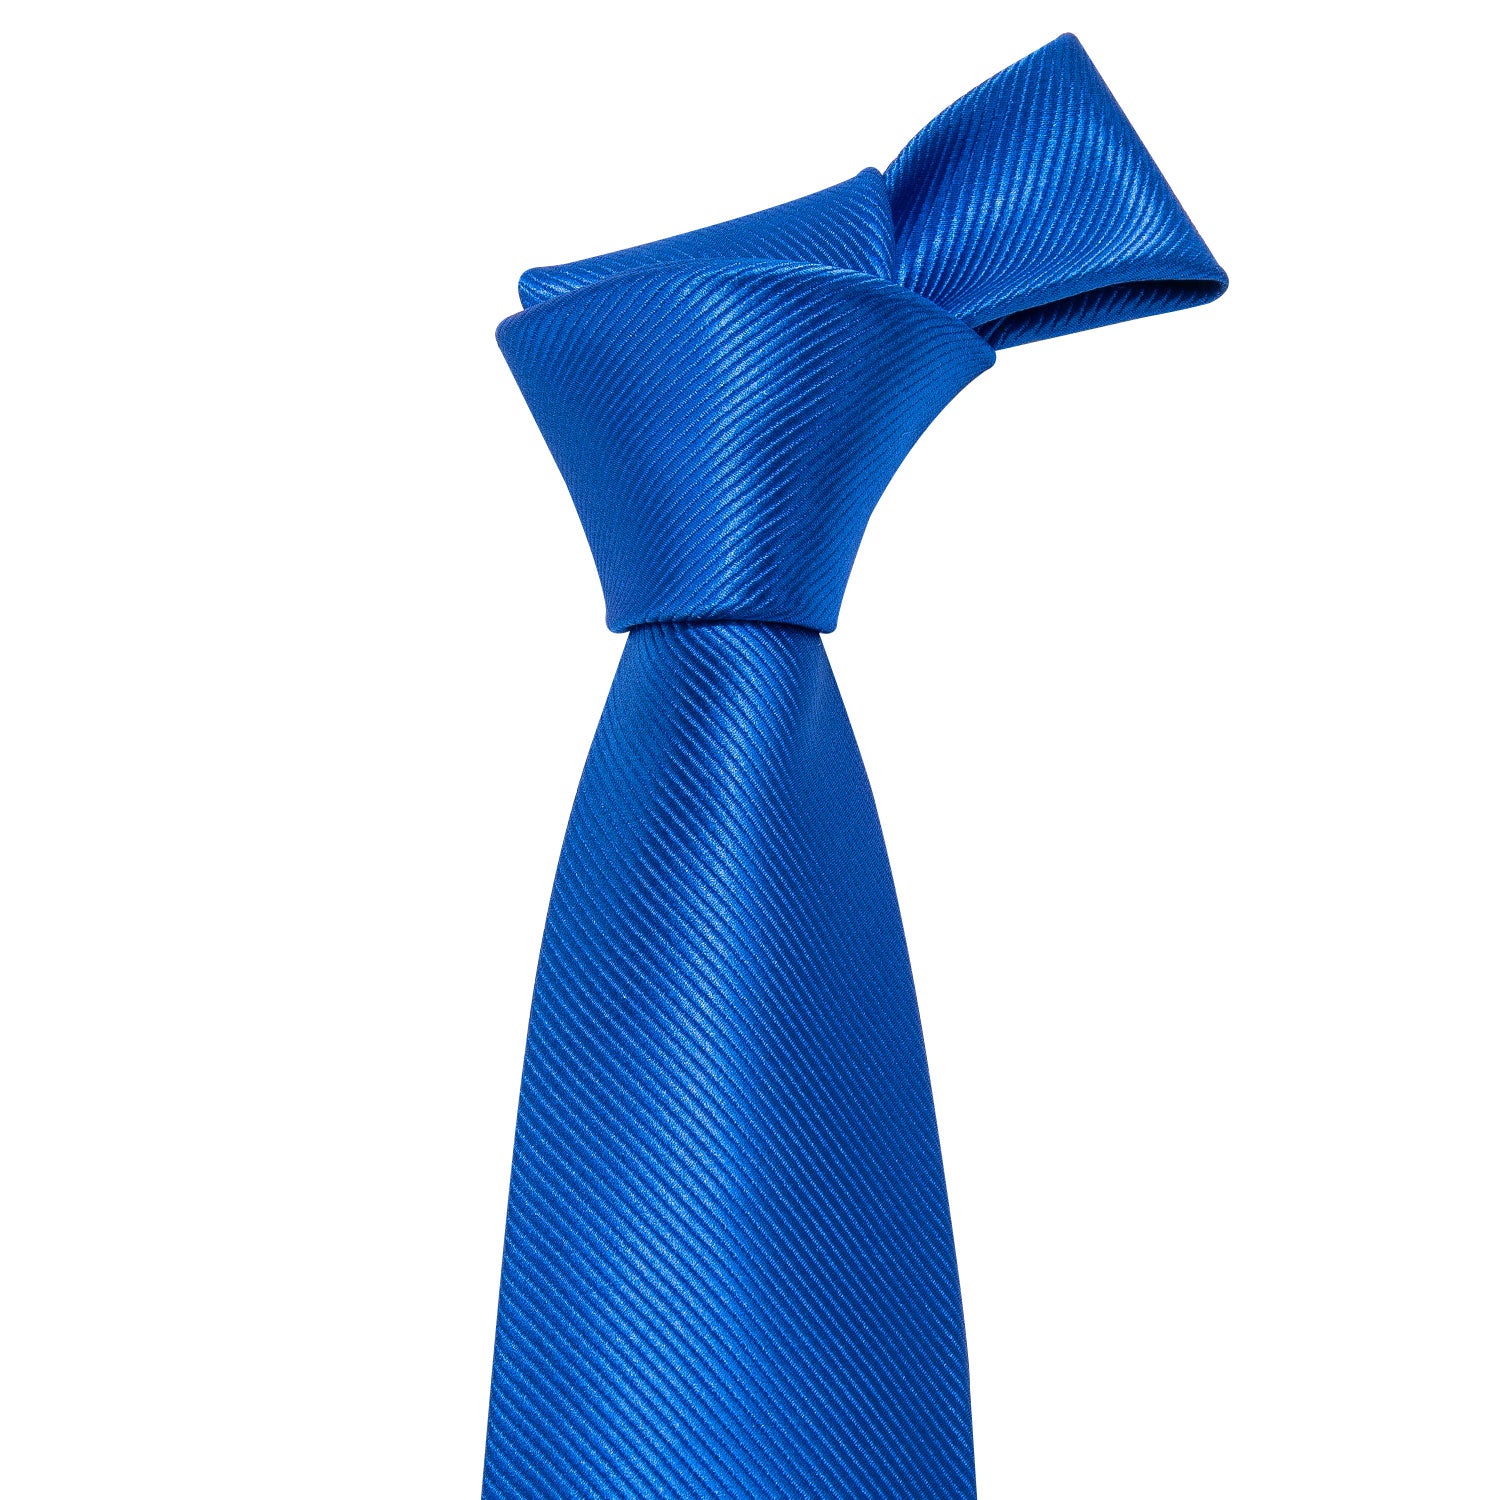 blue tie with white stripes